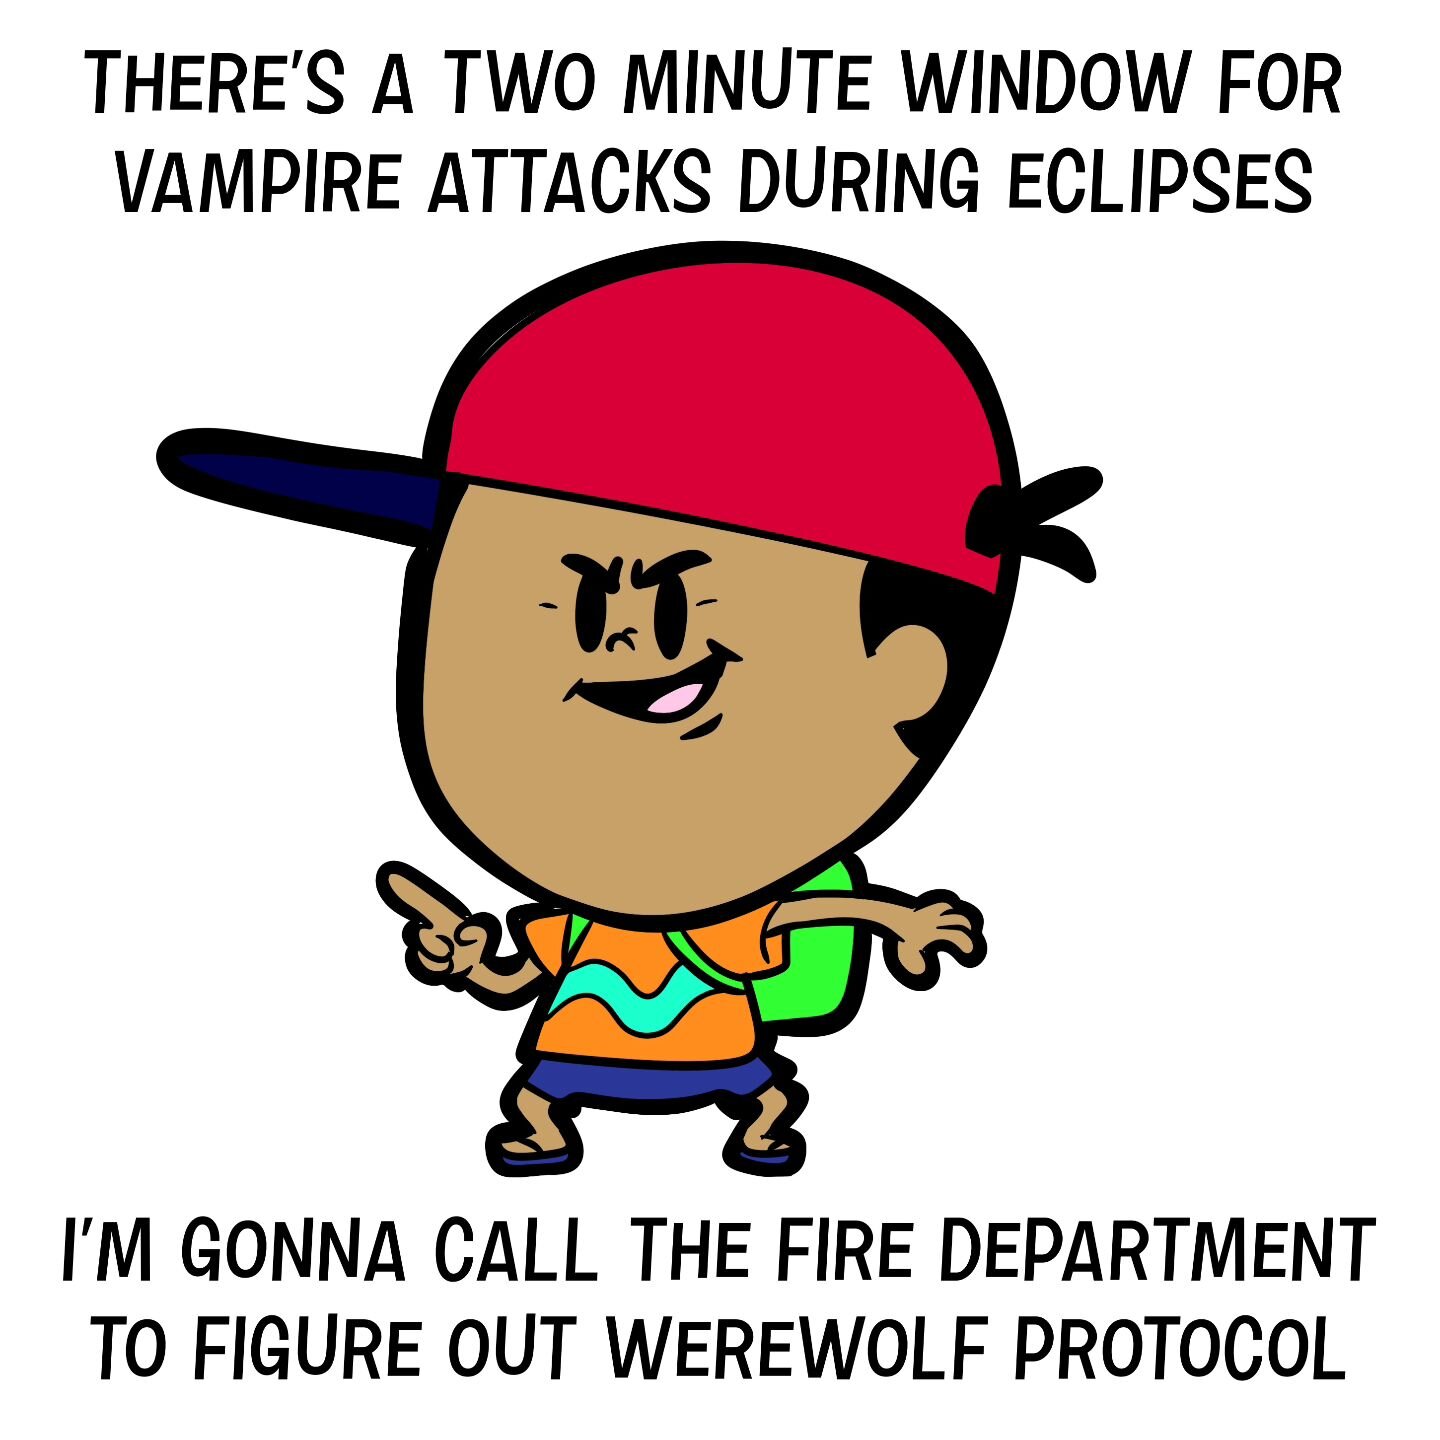 (sidenote: werewolf protocol is a sick name)

#eclipse
#vampire
#butwhatkindofmoonisit
#werewolf
#art